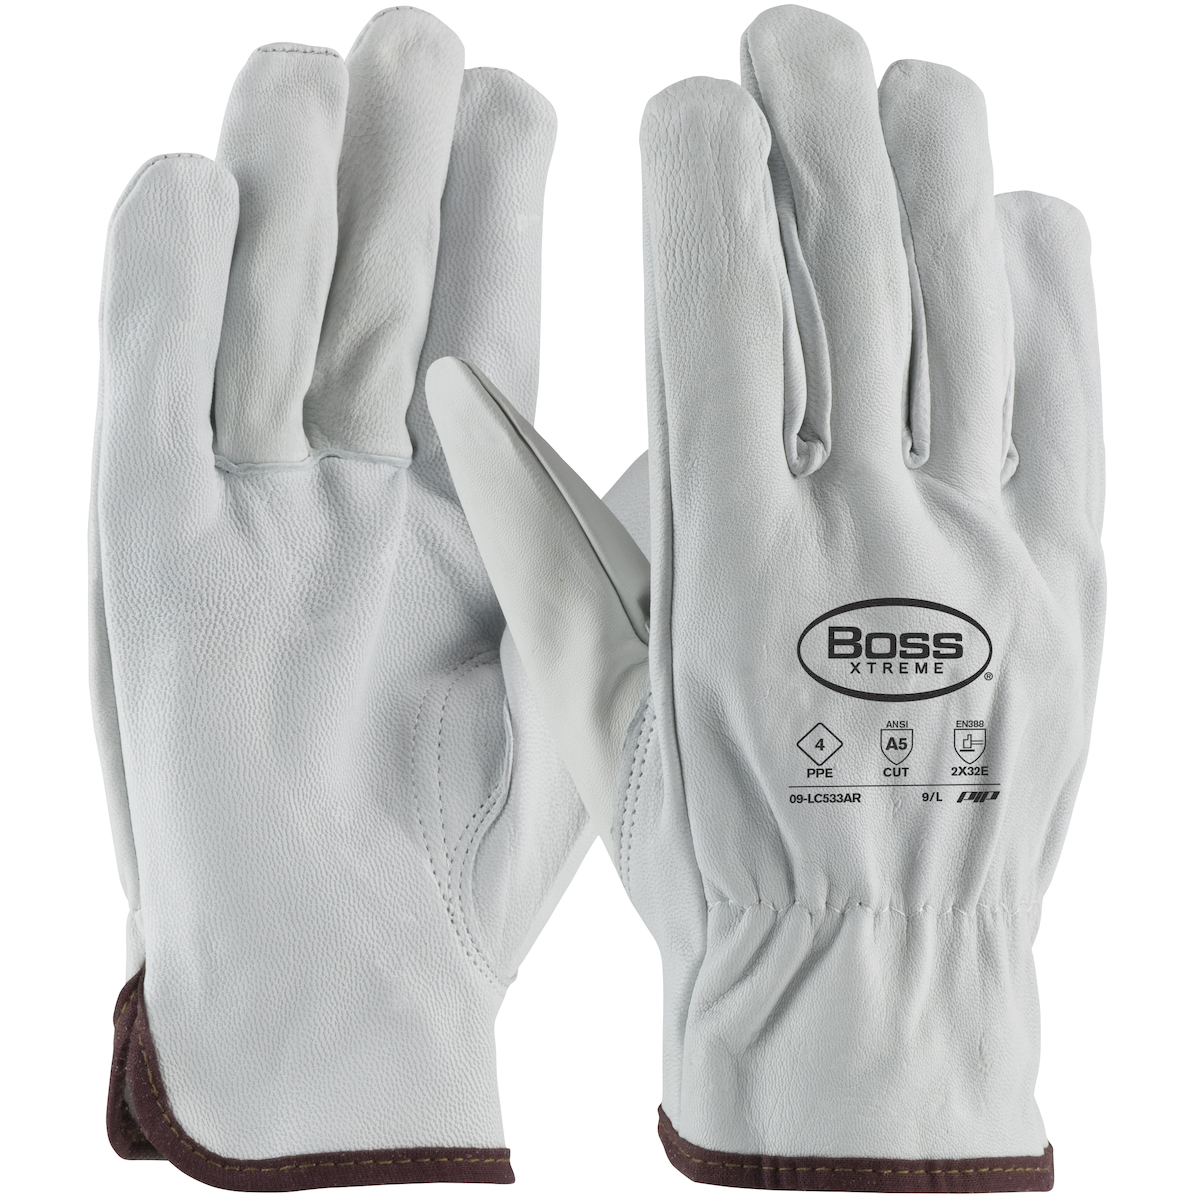 09-LC533AR  PIP® Boss® Xtreme AR Top Grain Goatskin Leather Drivers Glove with Para-Aramid Lining - Keystone Thumb